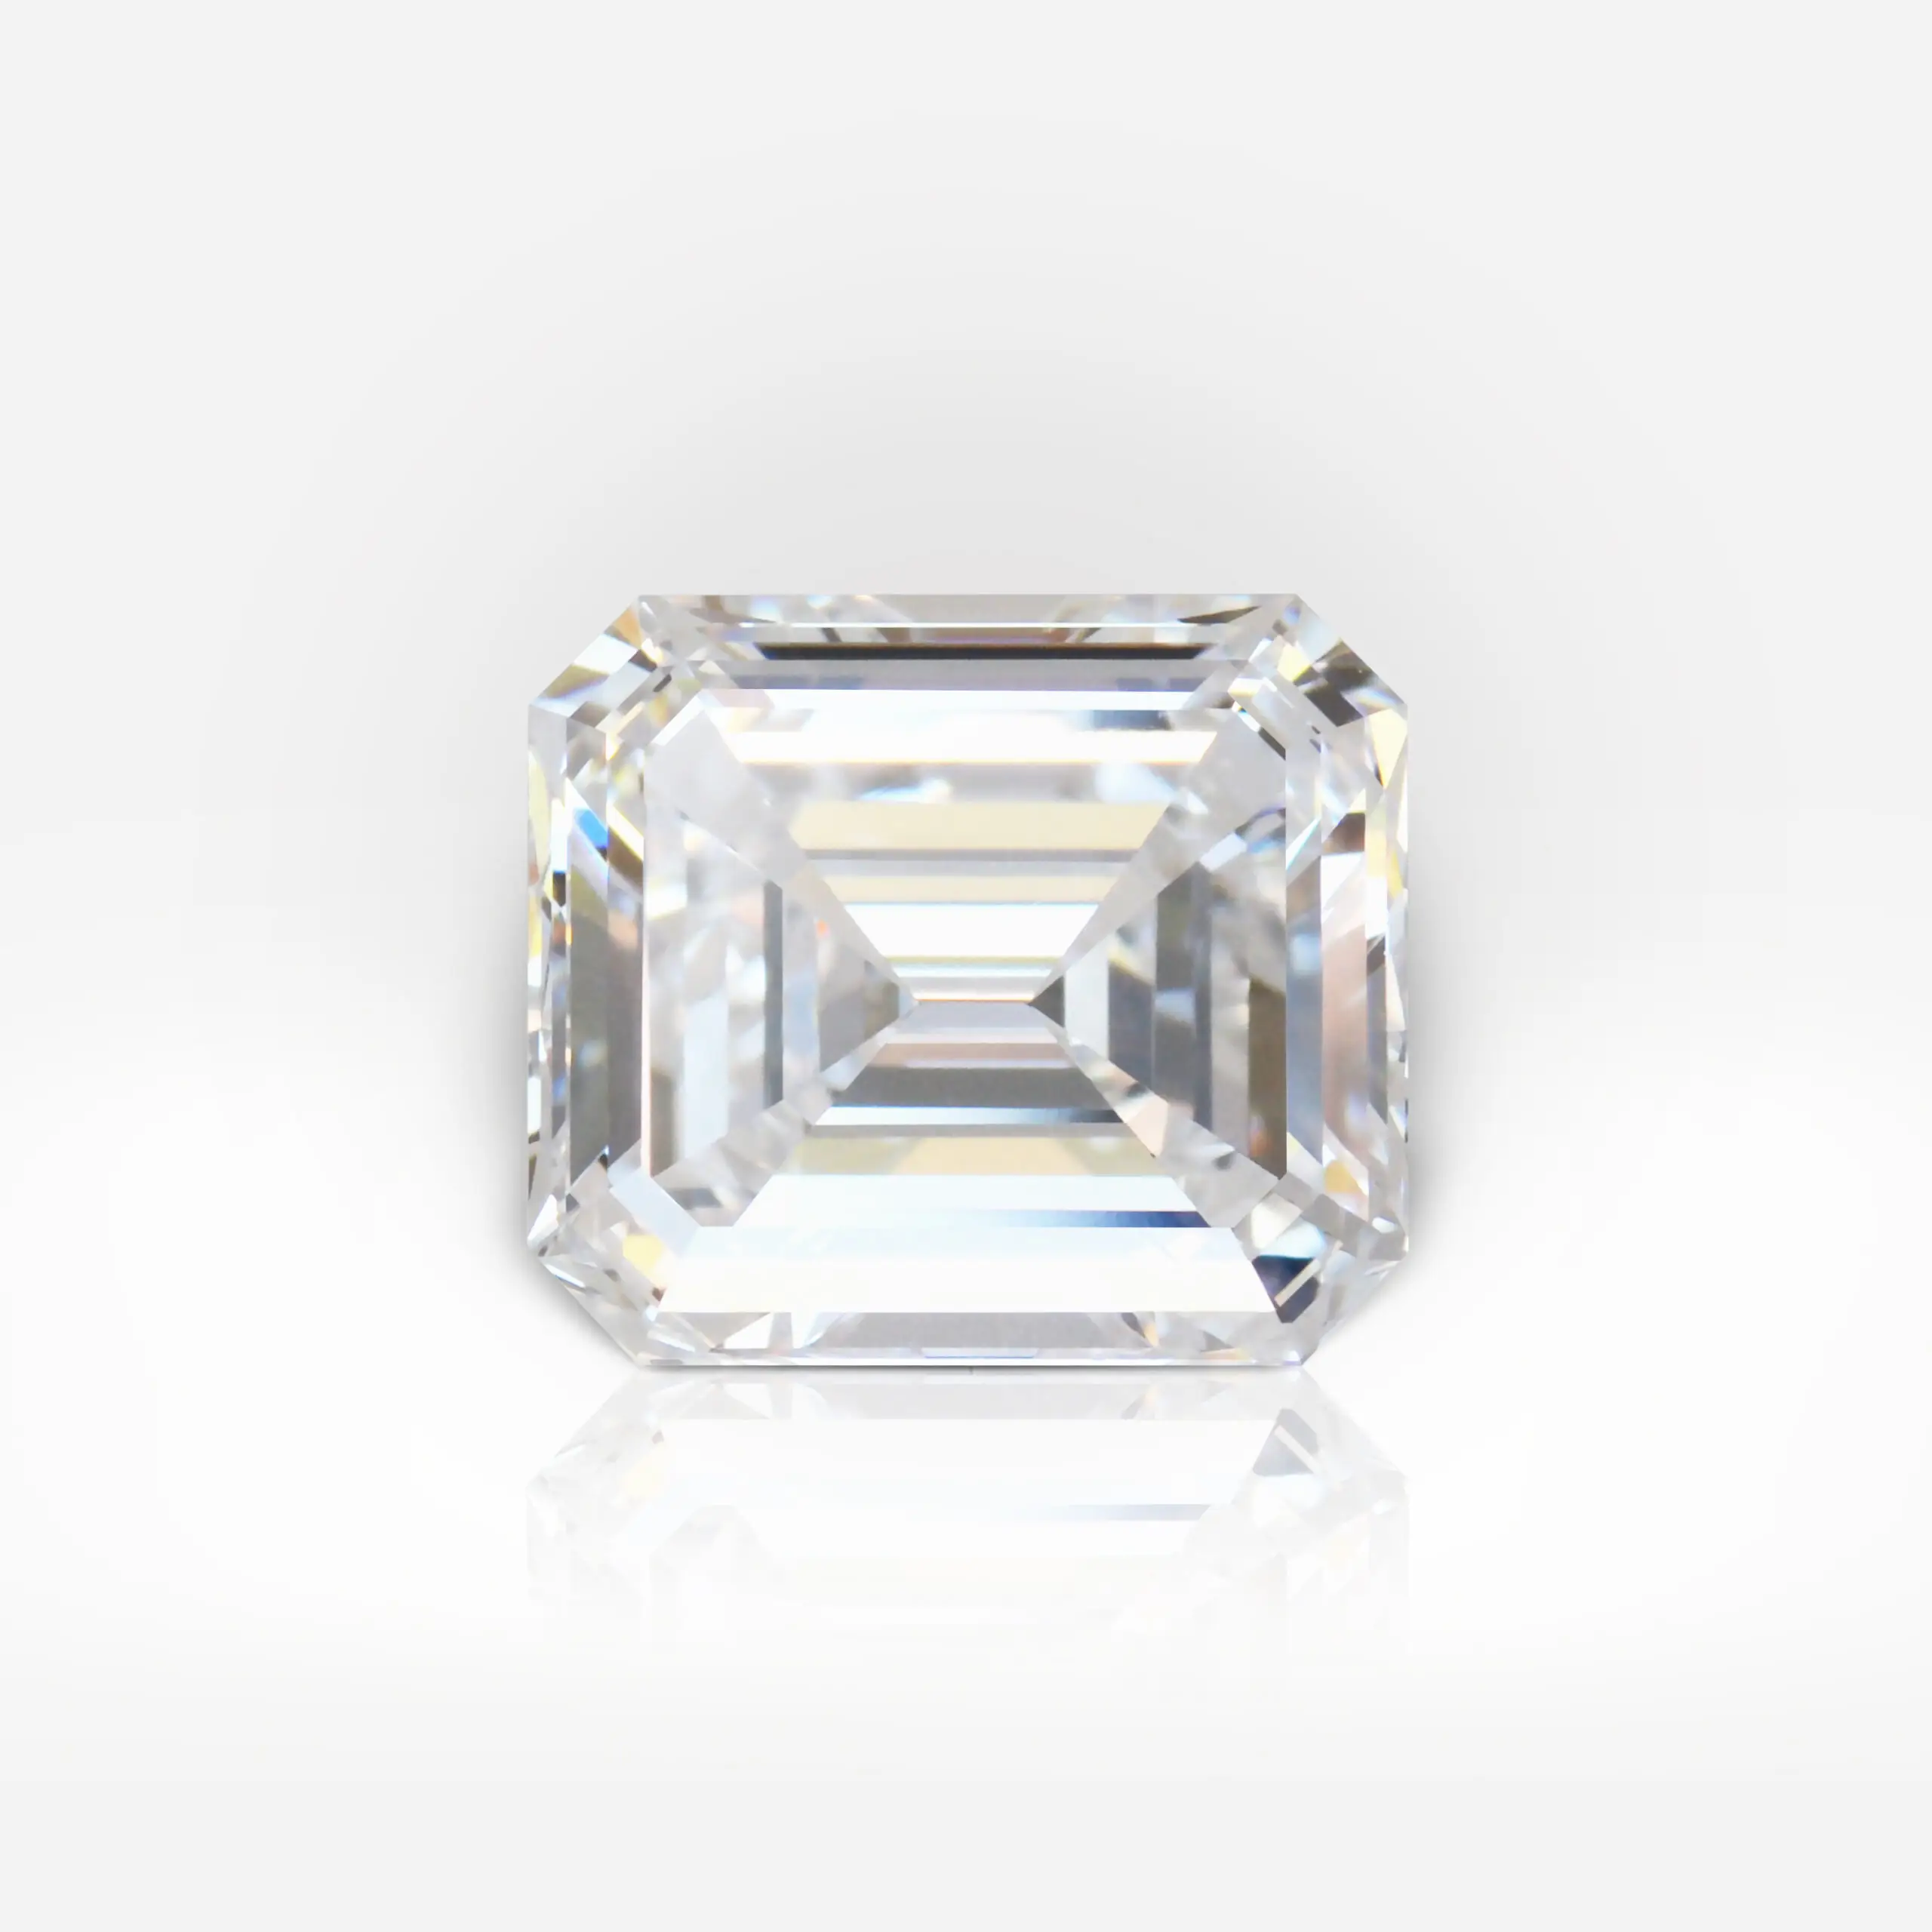 5.15 carat D IF Emerald Shape Diamond GIA - picture 1